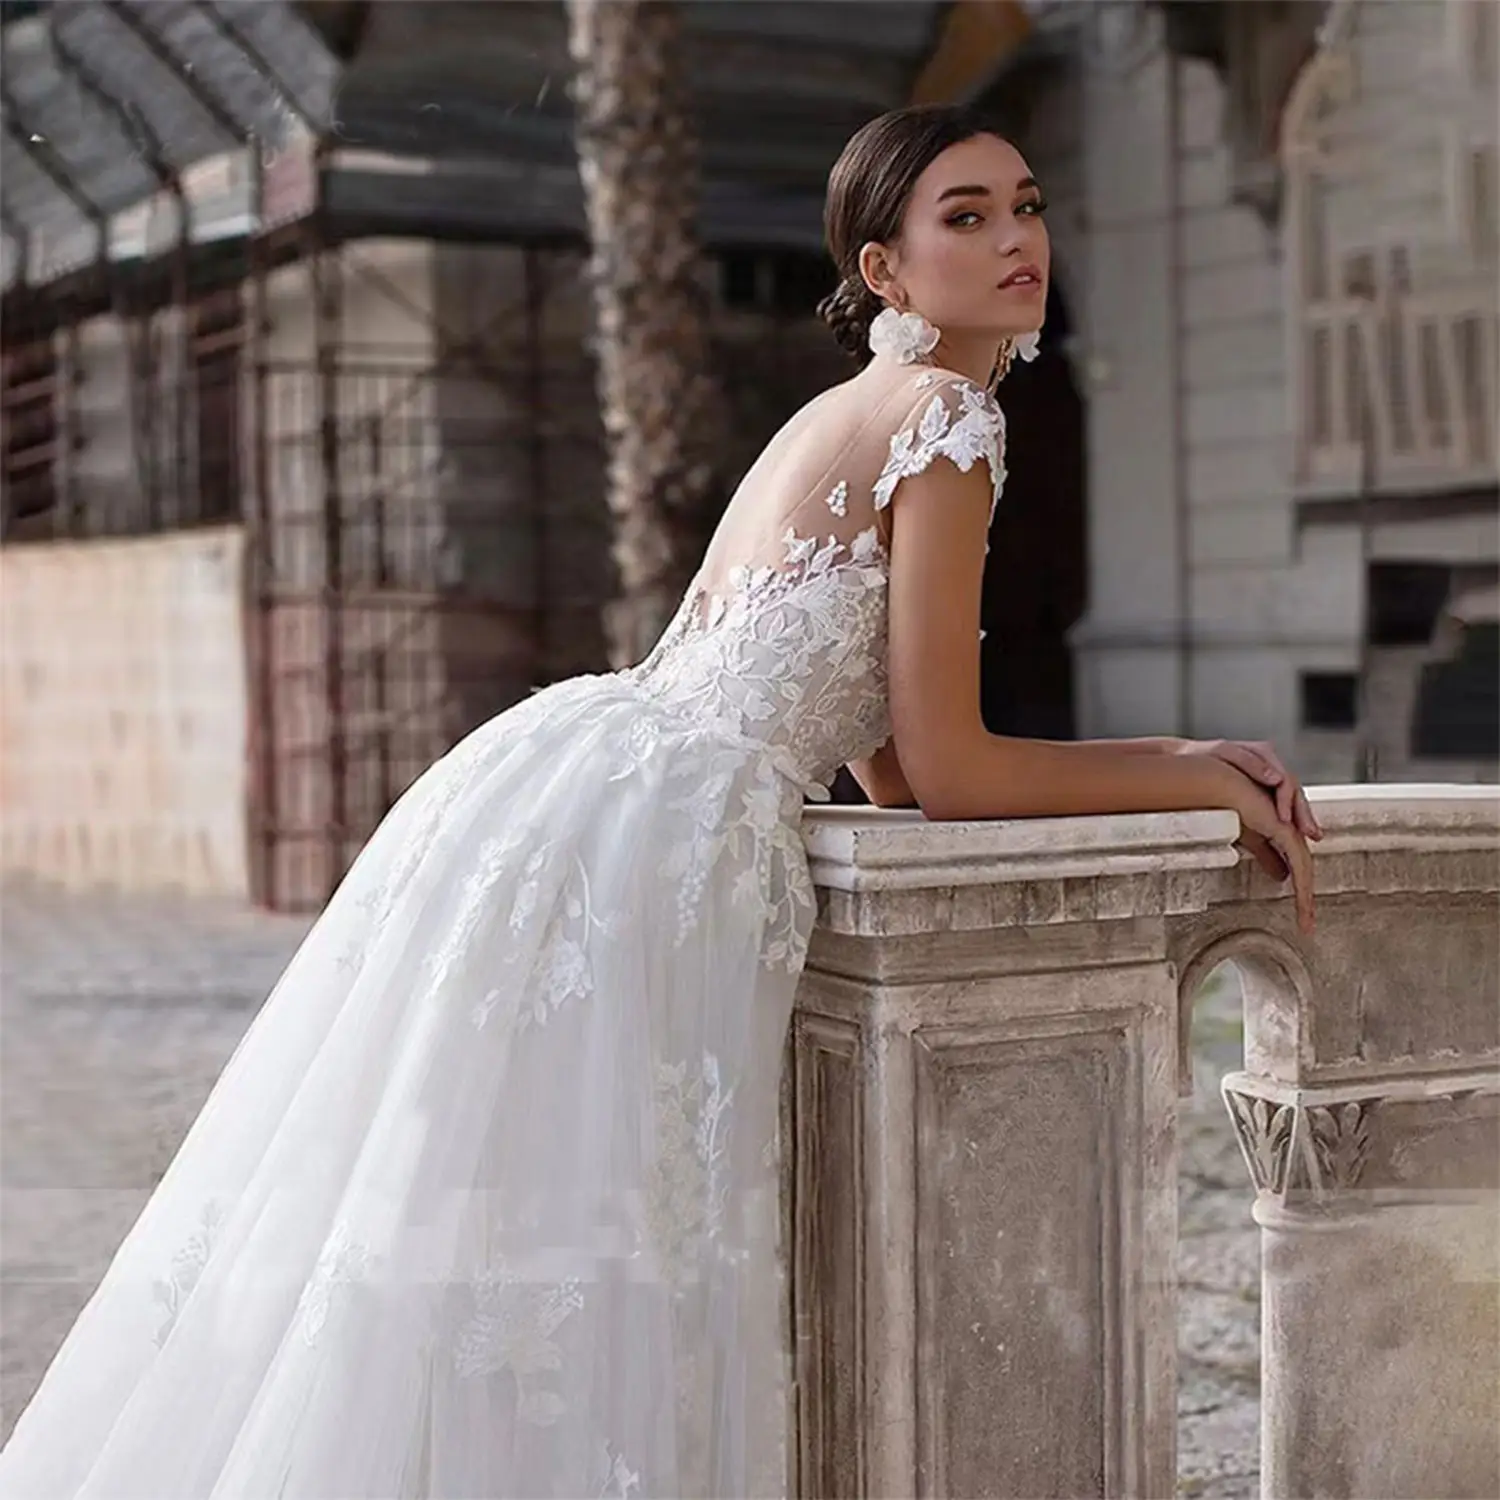 Pakaian Model Ledakan Baru Gaun Pengantin Wanita Mengkilap Renda Tembus Pandang Model 2020 Pernikahan